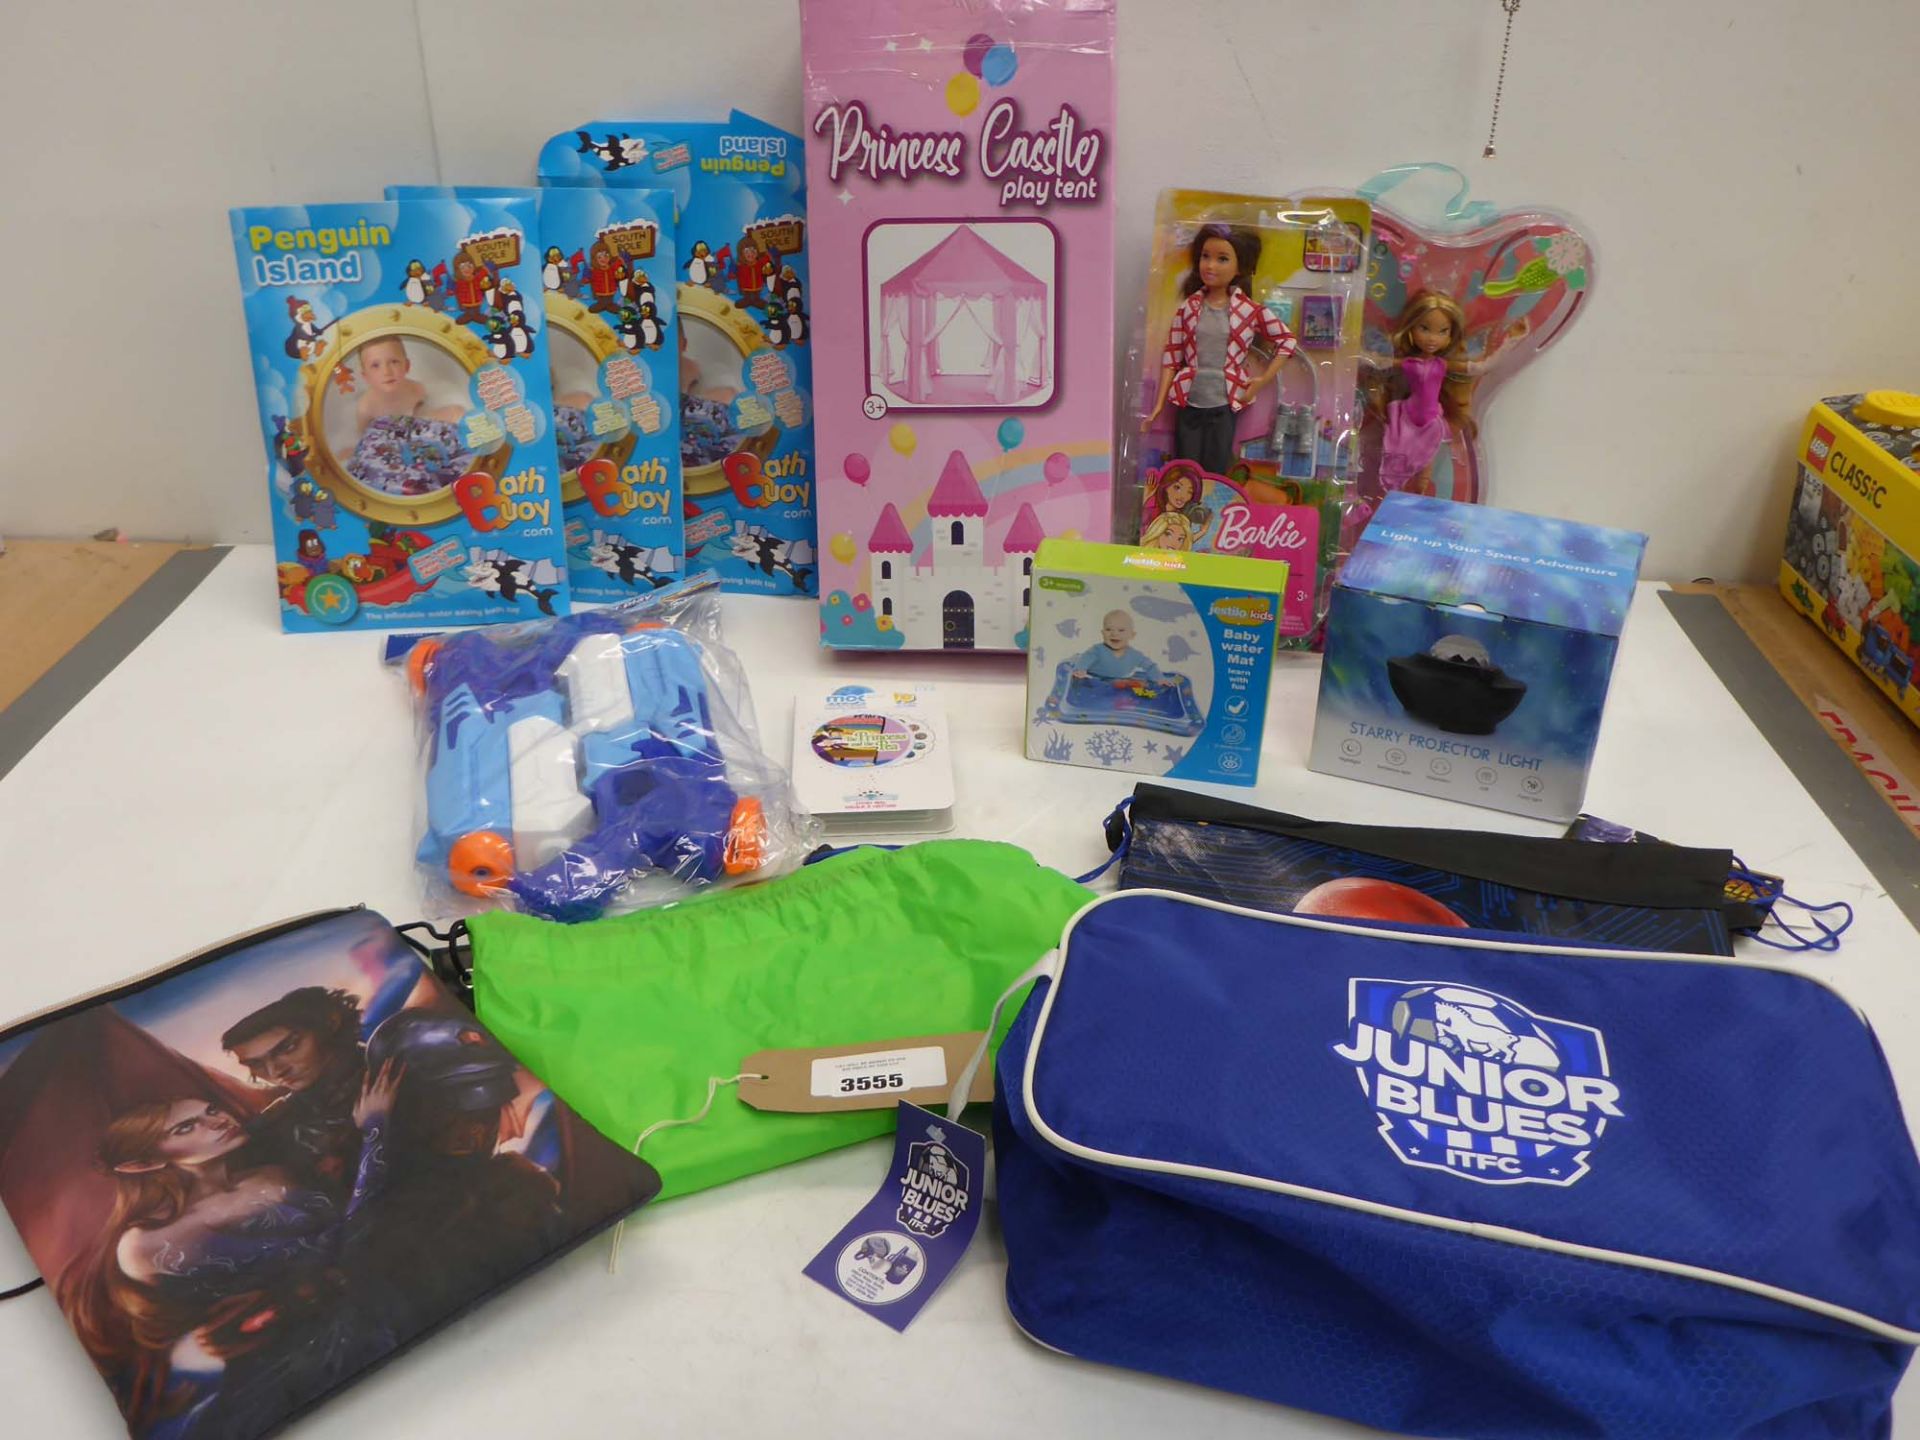 Princess play tent, Water gun, Bath Buoys, Baby water mat, Projector lamp, Barbie doll, Kids bags